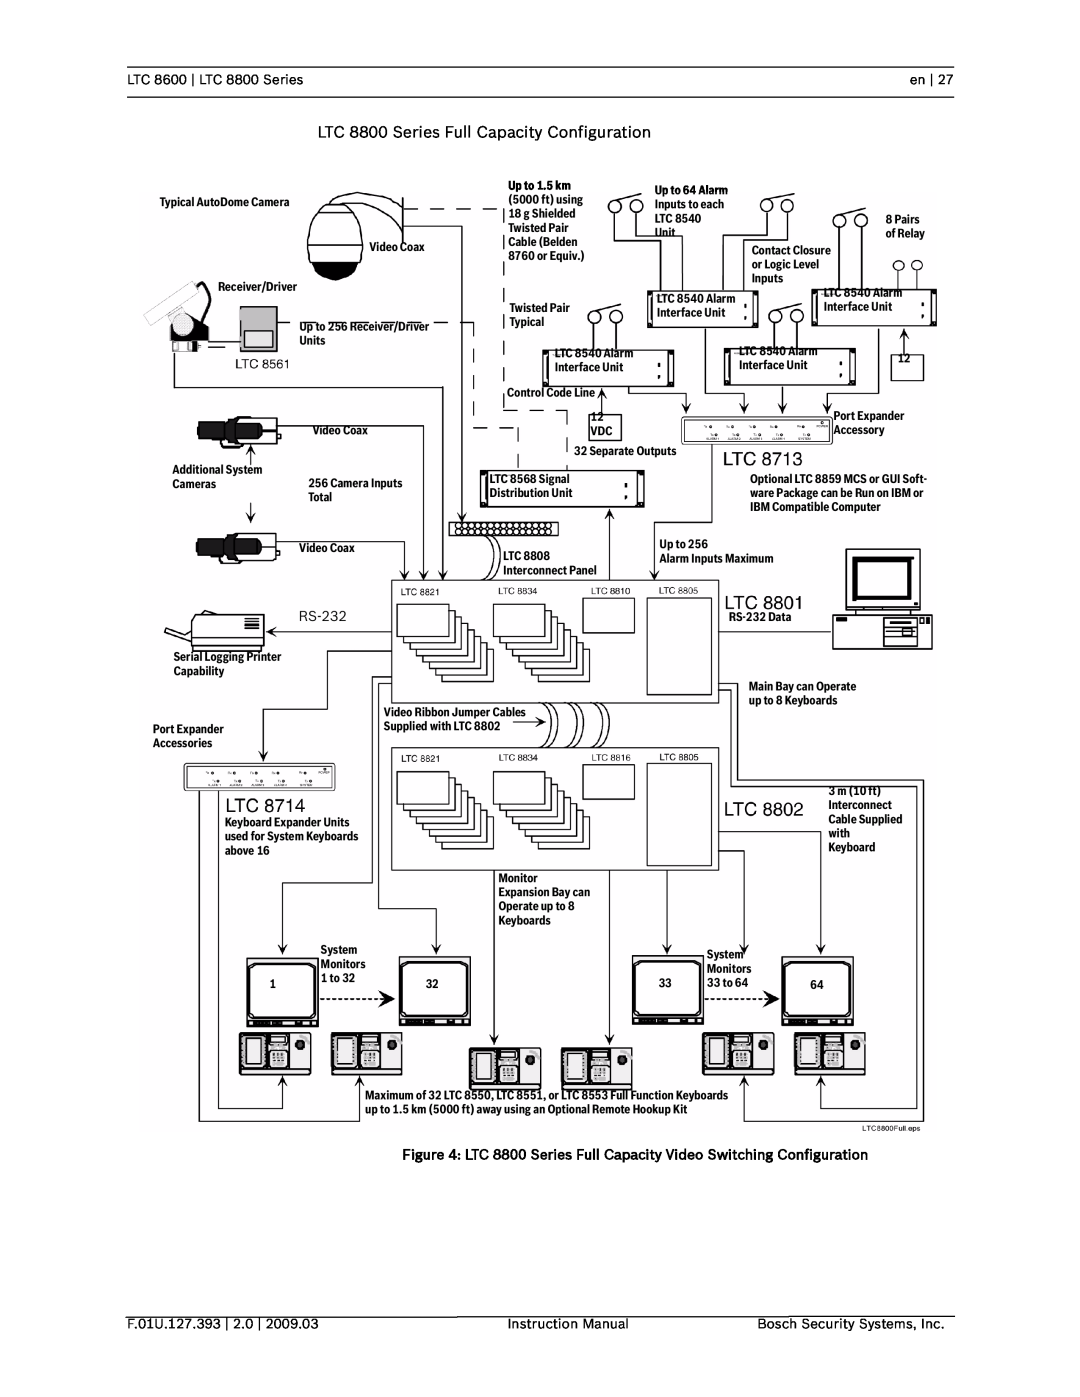 Bosch Appliances LTC 8600 LTC 8800 Series Full Capacity Configuration, RS-232, F.01U.127.393, Instruction Manual 